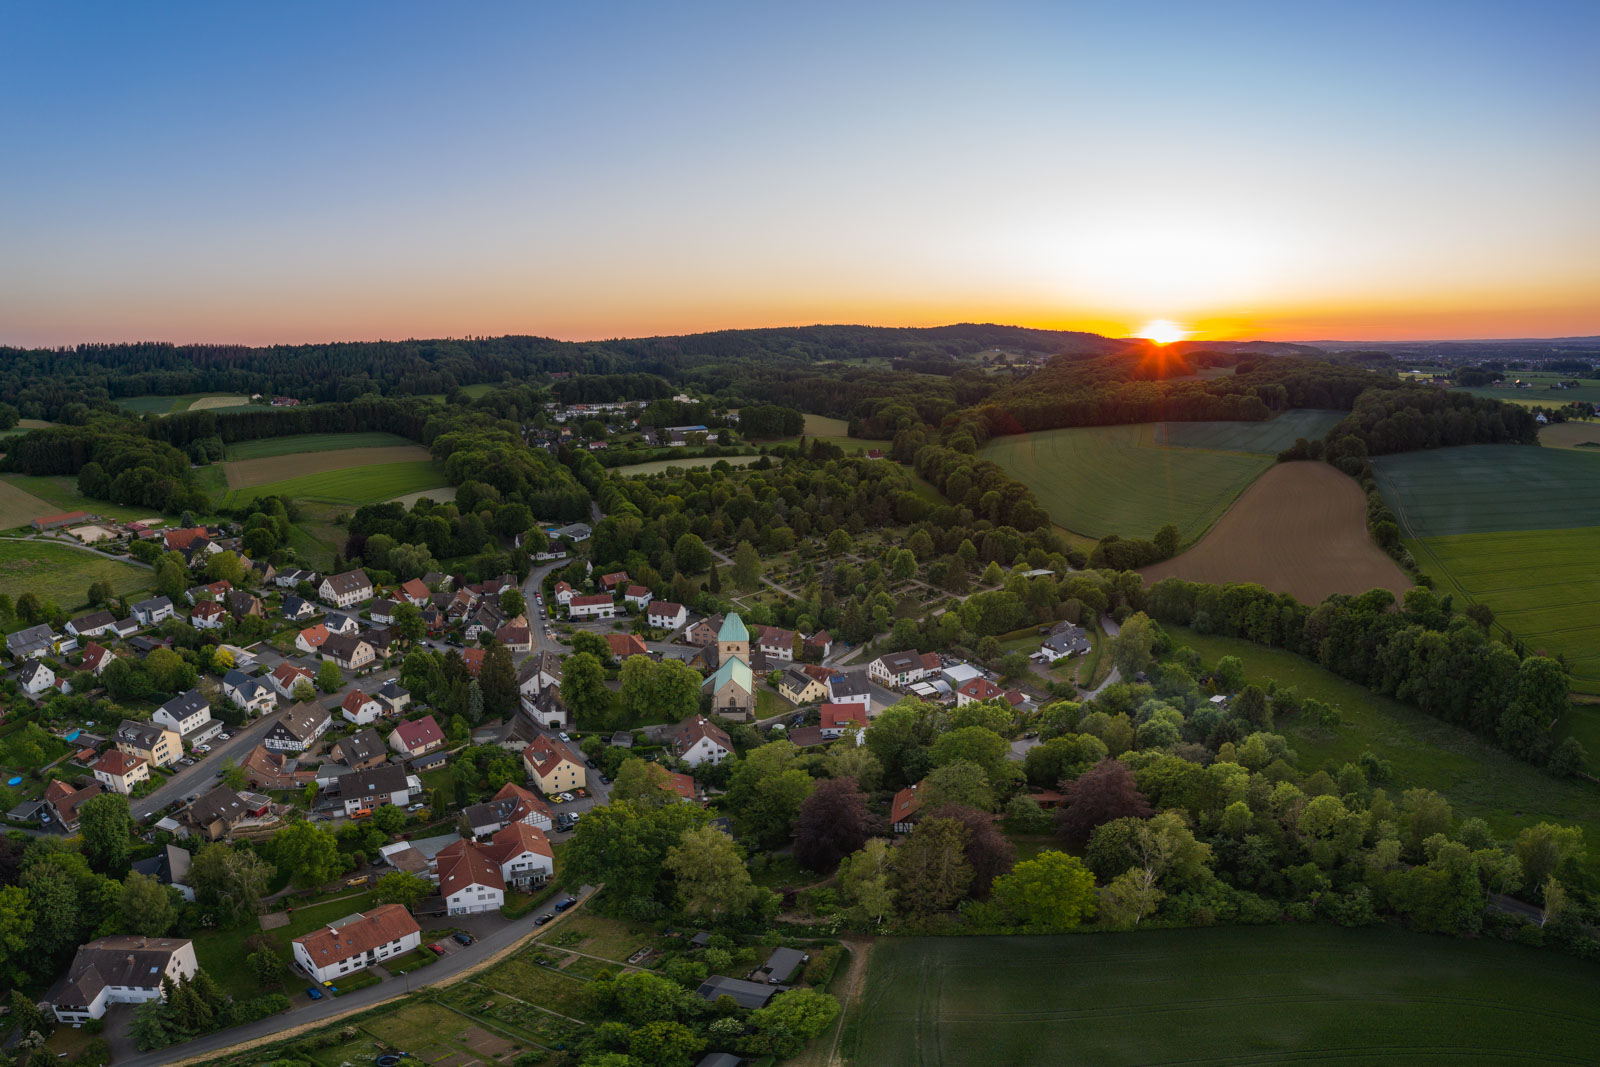 Sunset above 'Kirchdornberg' (Bielefeld, Germany).